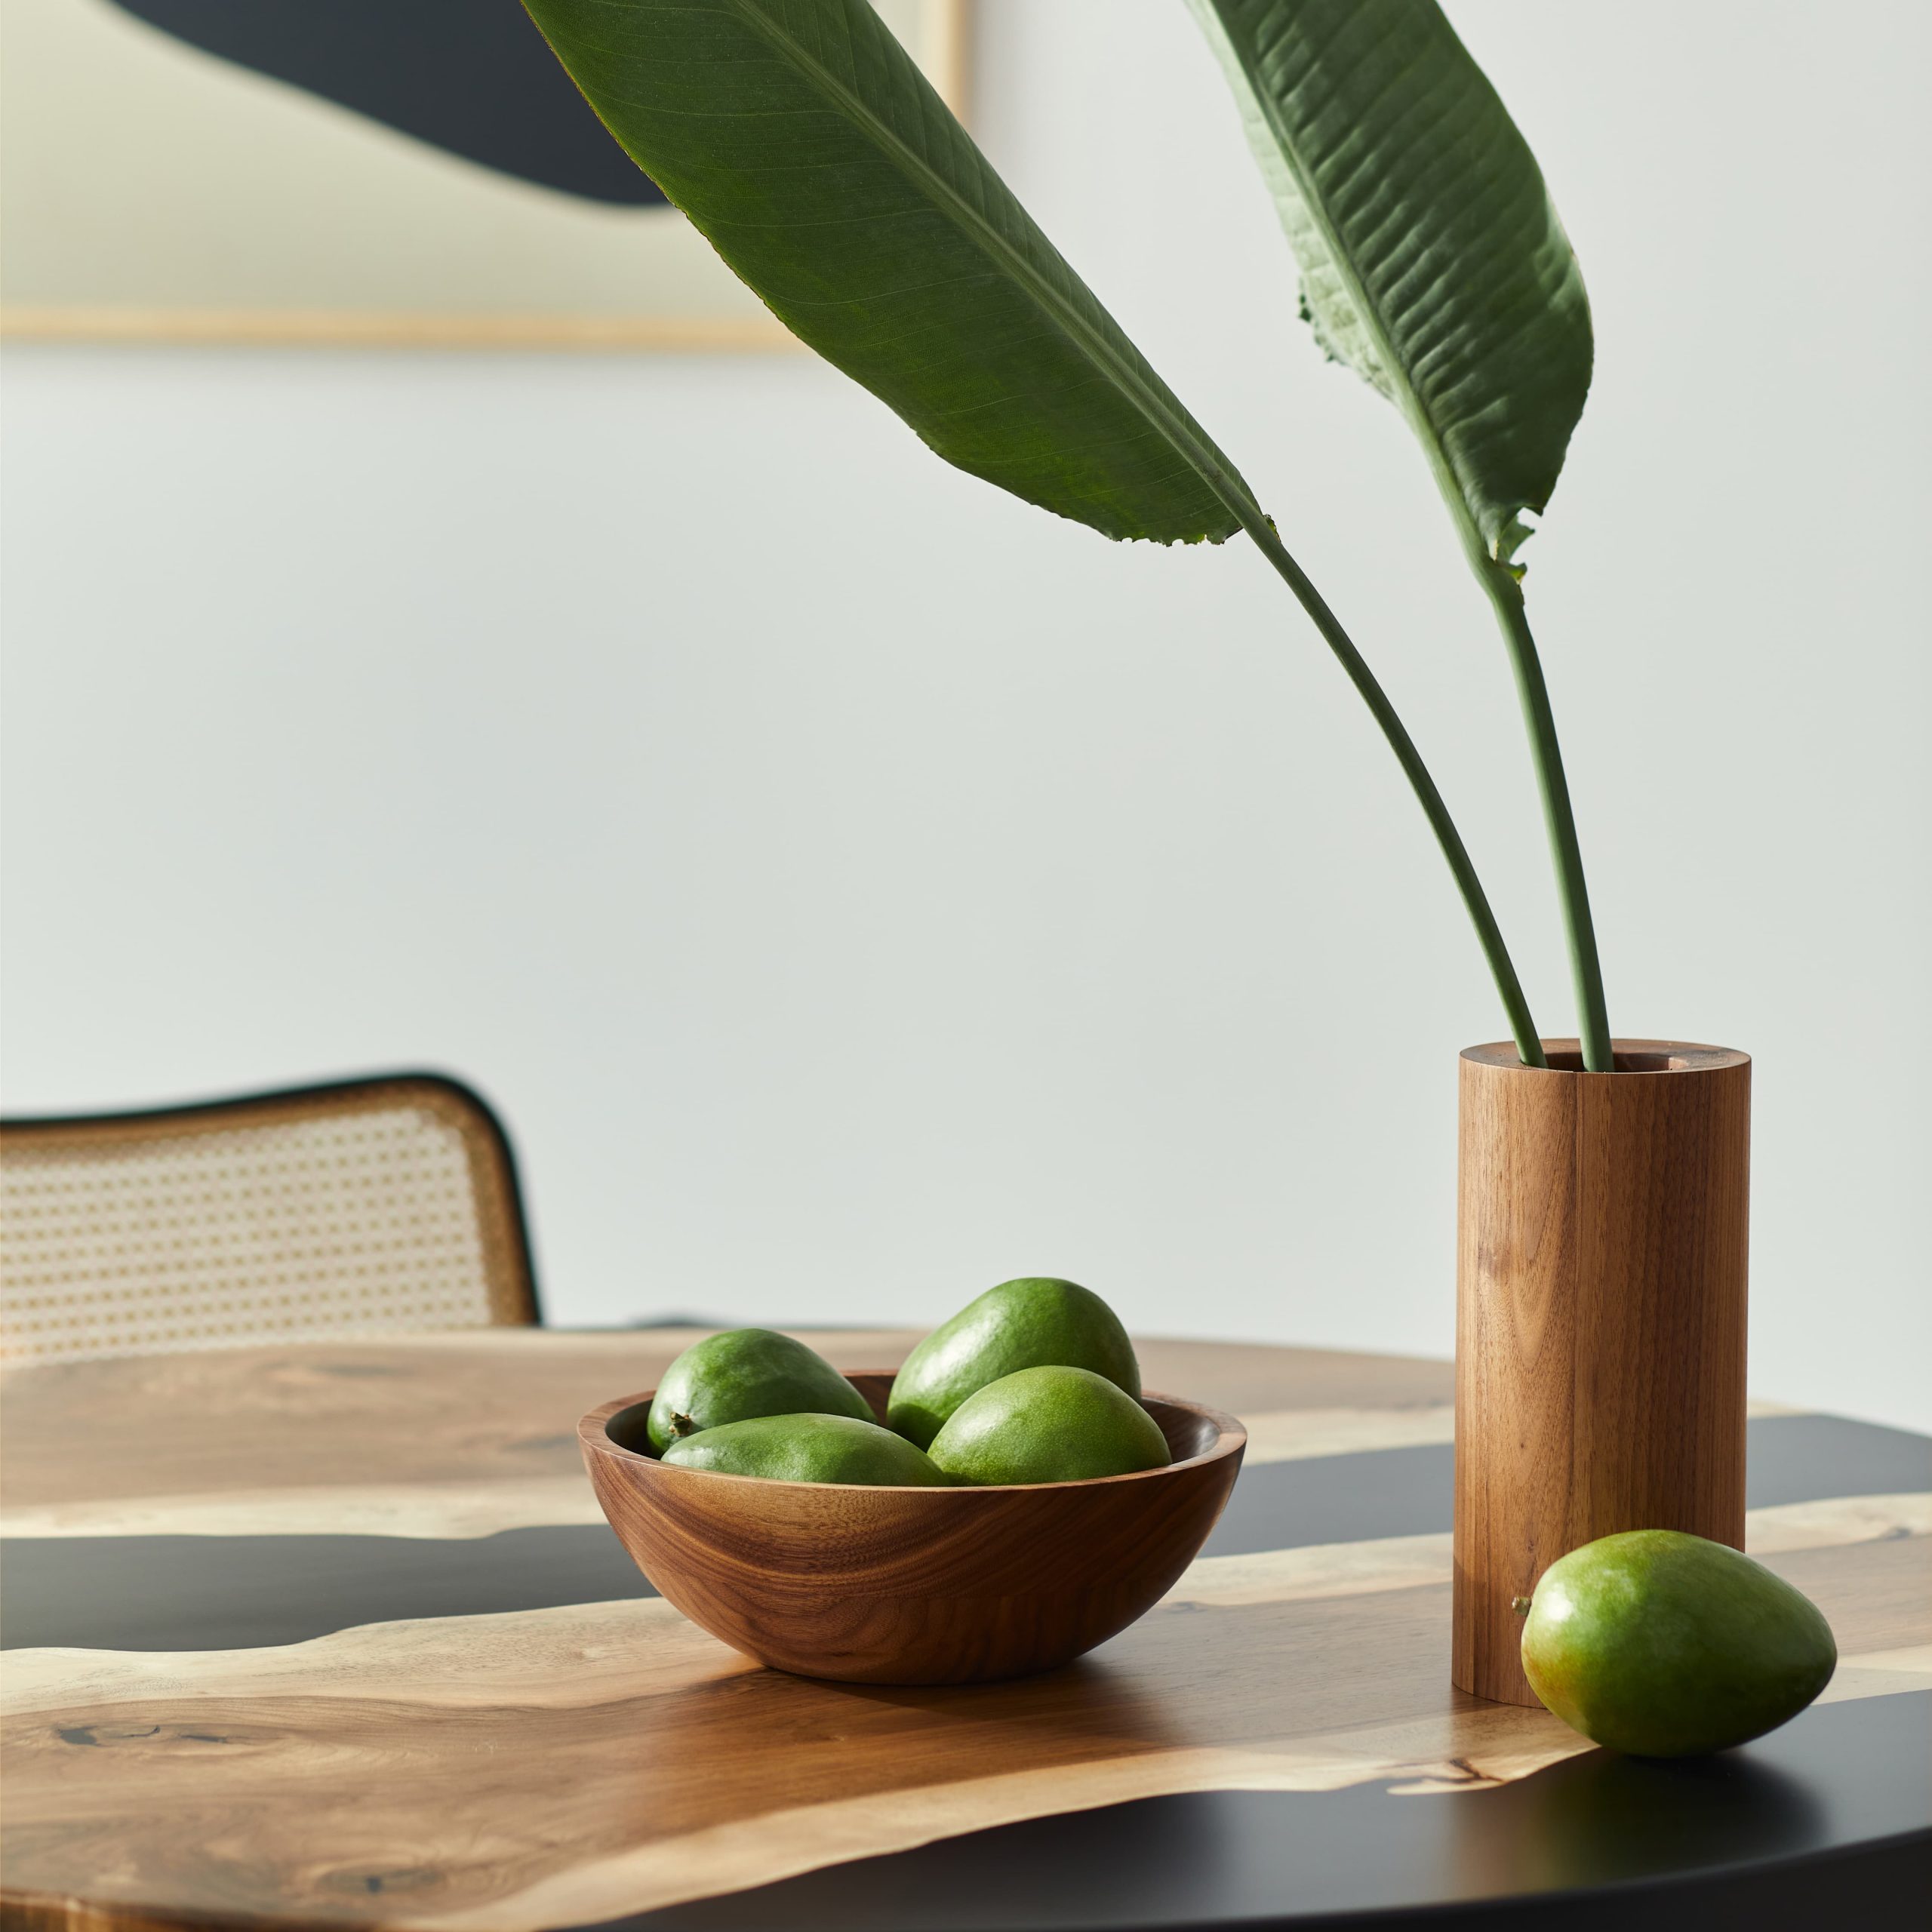 minimalist-composition-on-the-design-wooden-table-2022-05-26-05-53-59-utc-1-1